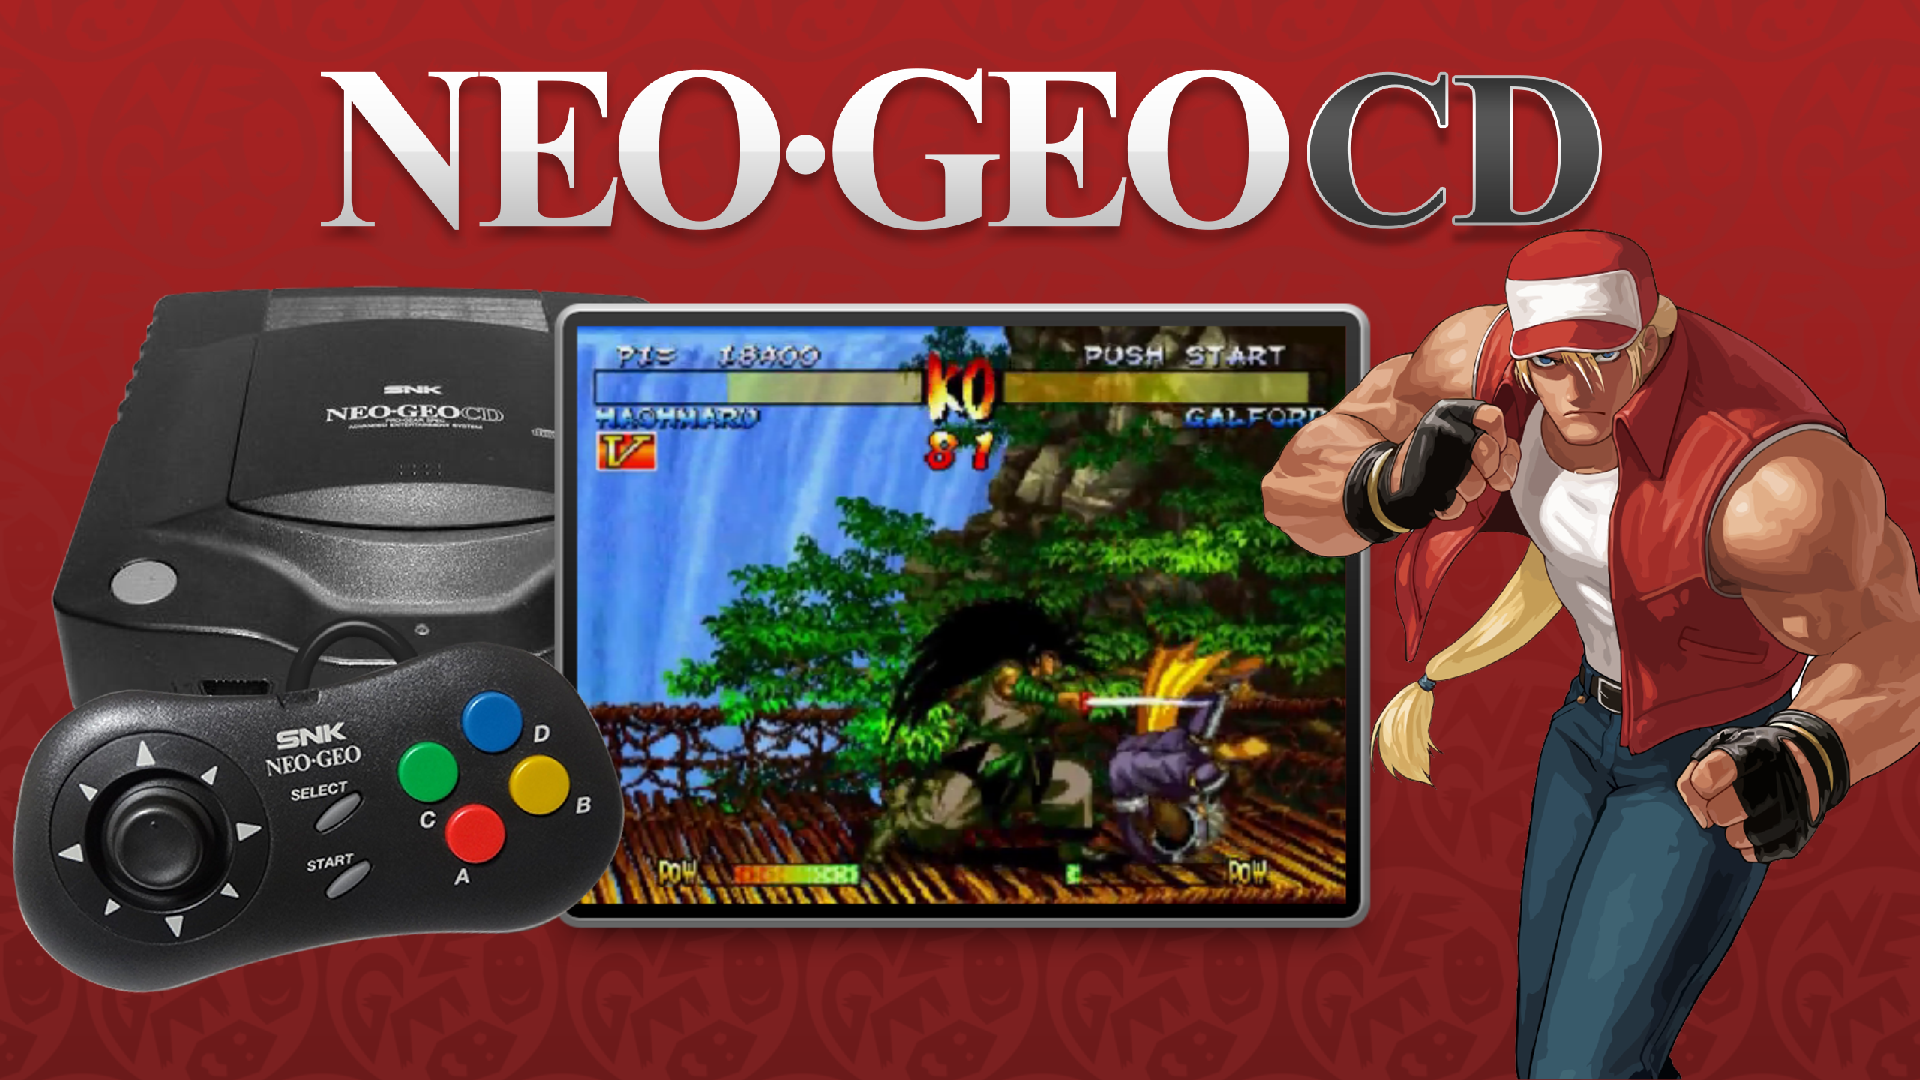 Snk Neo Geo Cd Main Menu 16 9st Main Menu Themes Hyperspin